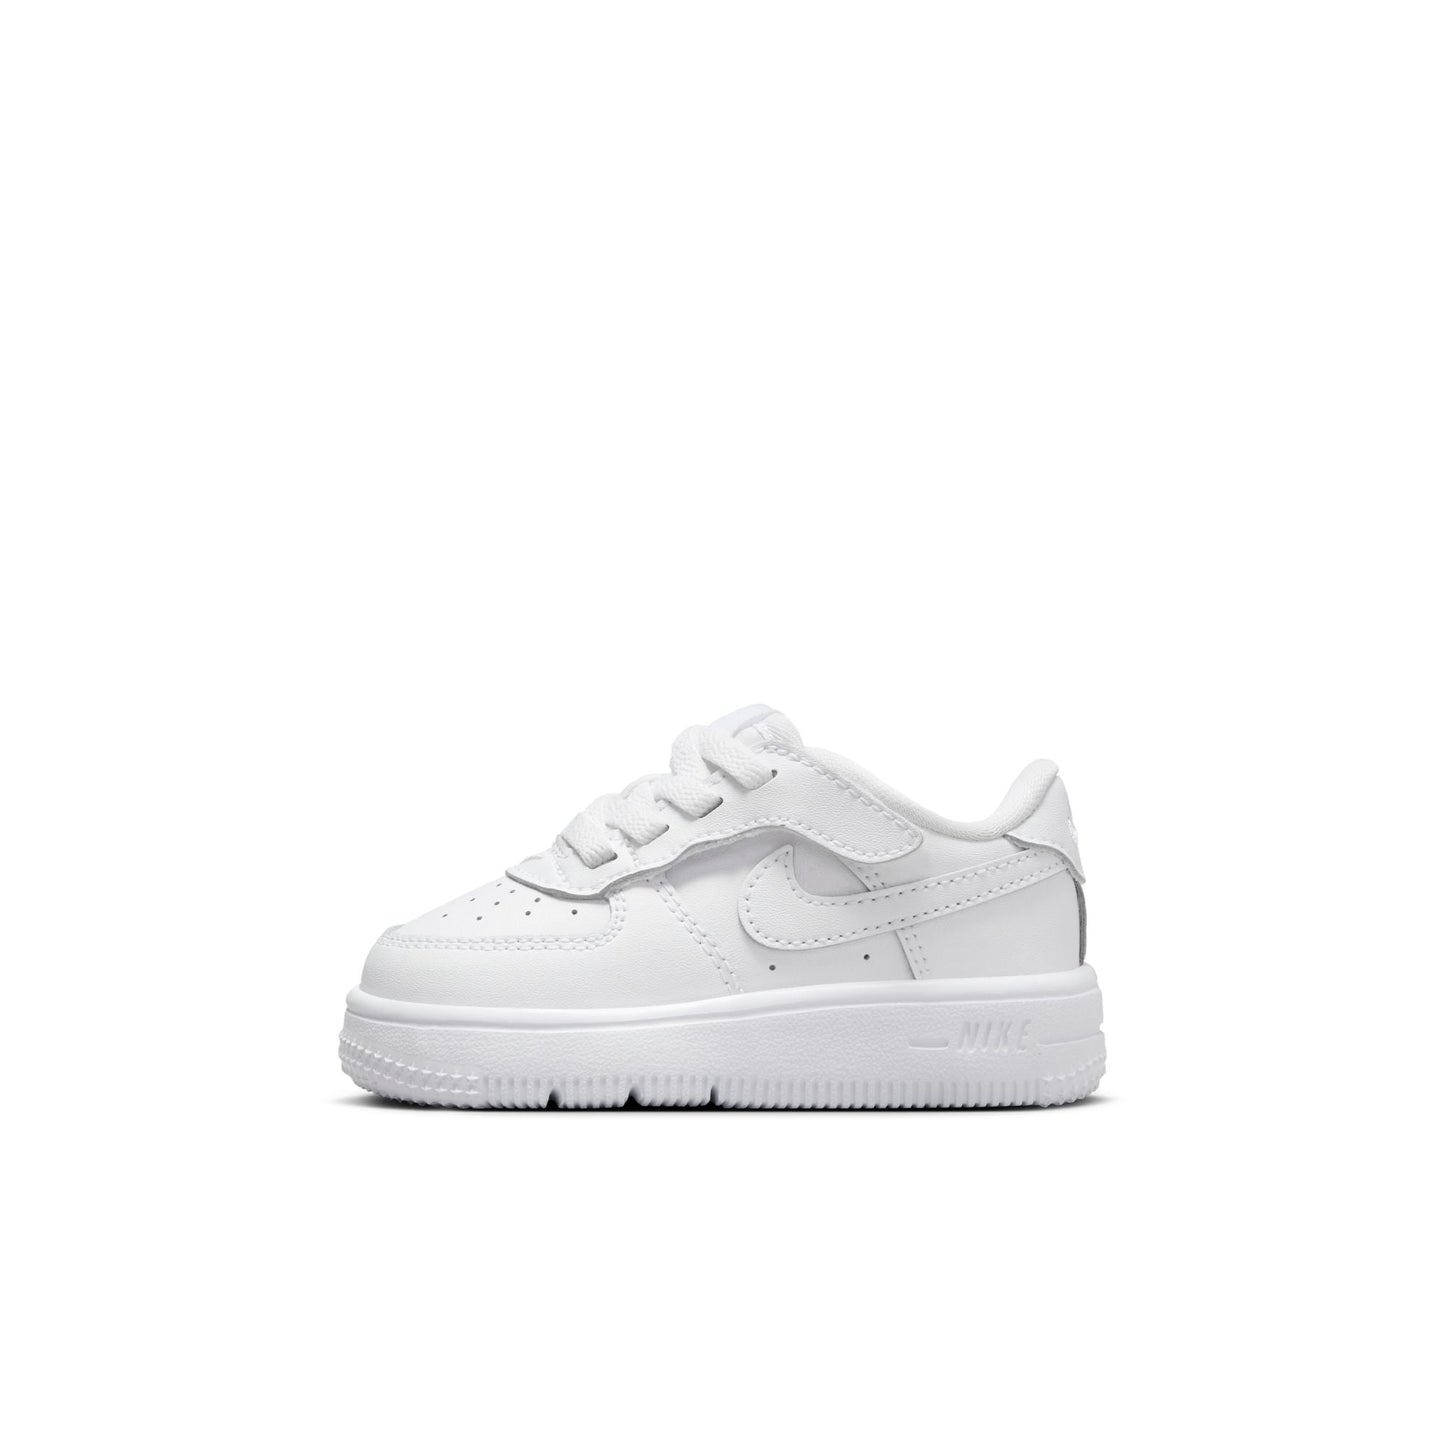 Toddler Nike Force 1 Low EasyOn - "White/White"